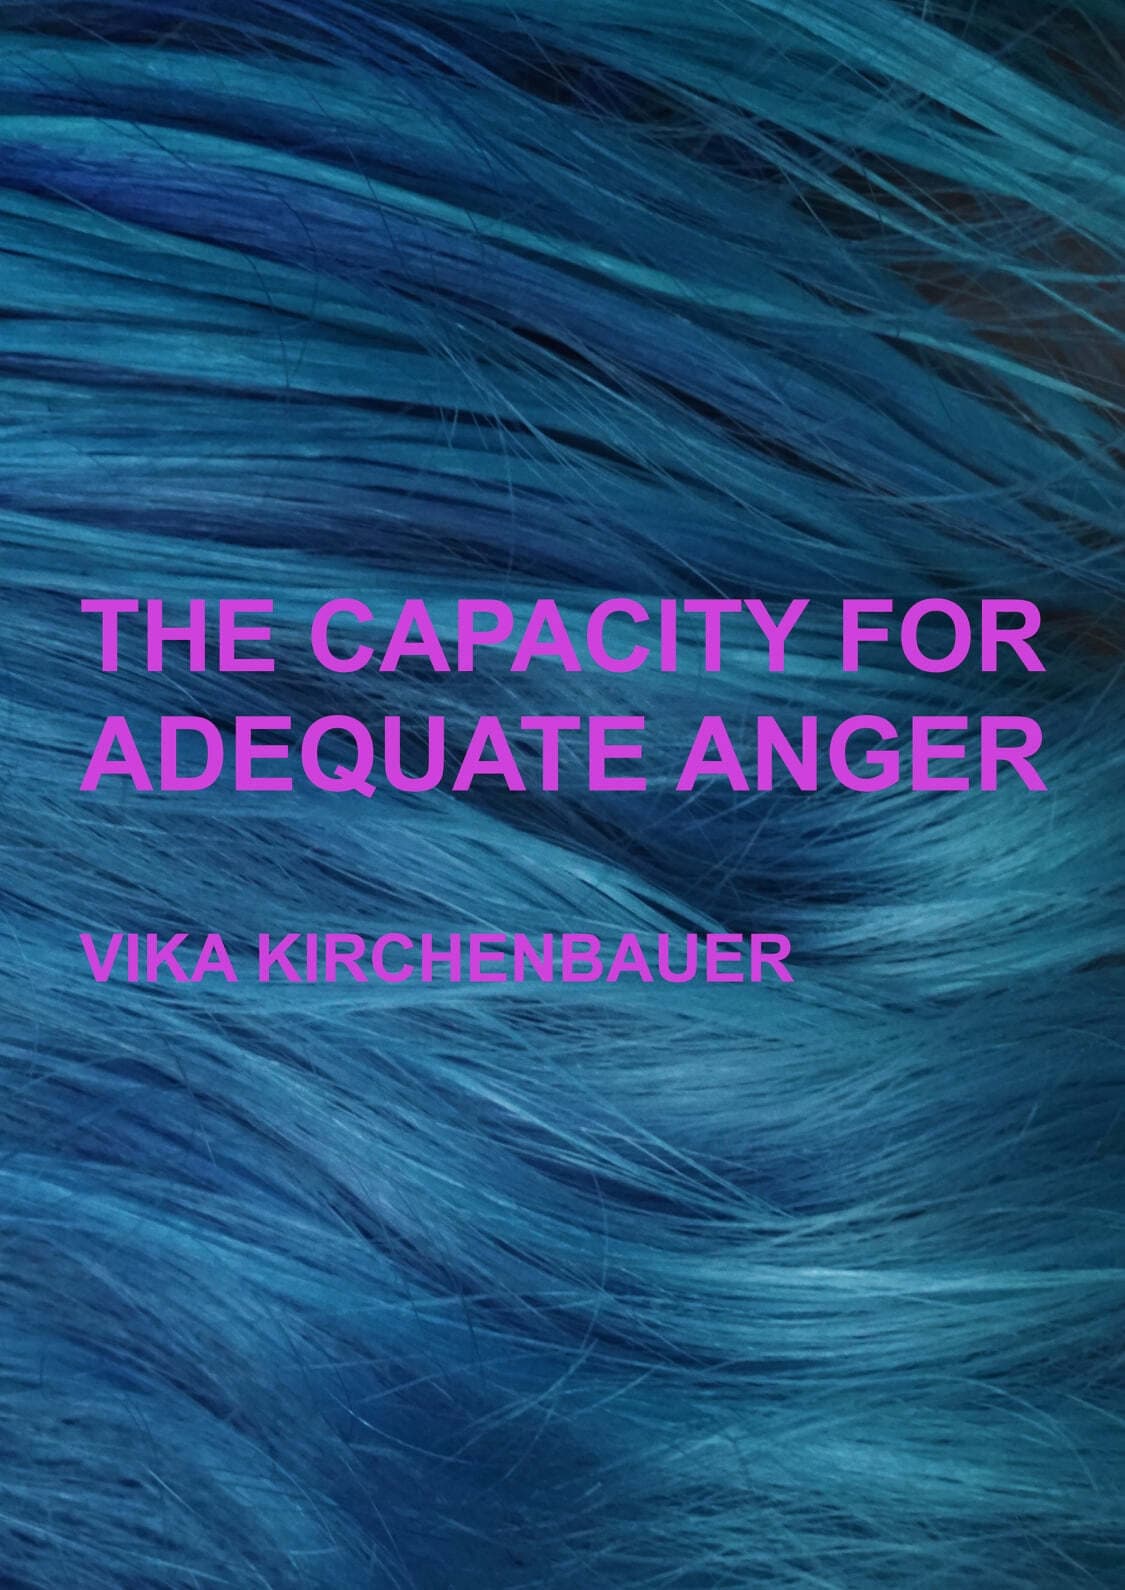 VER!(HD) Película The Capacity For Adequate Anger — [2021] Completa Español Latino